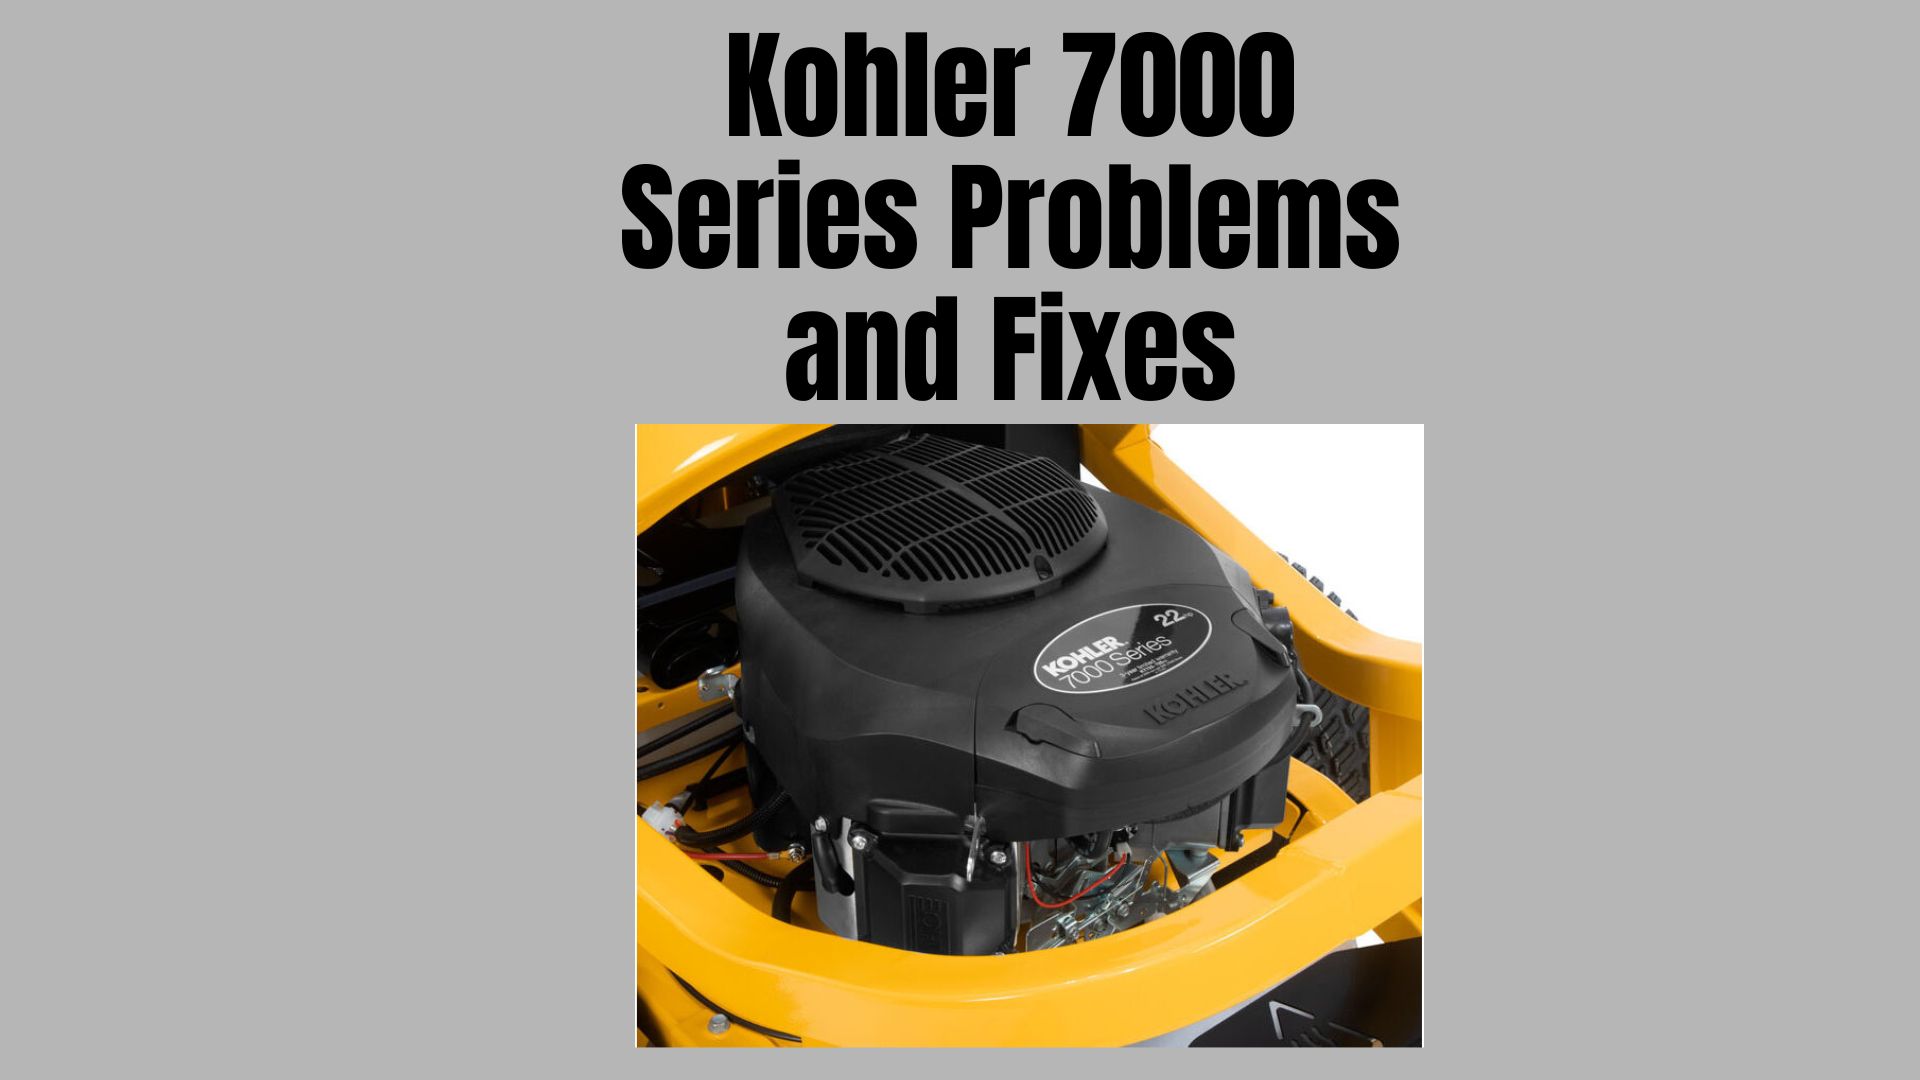 Kohler 7000 Series Problems